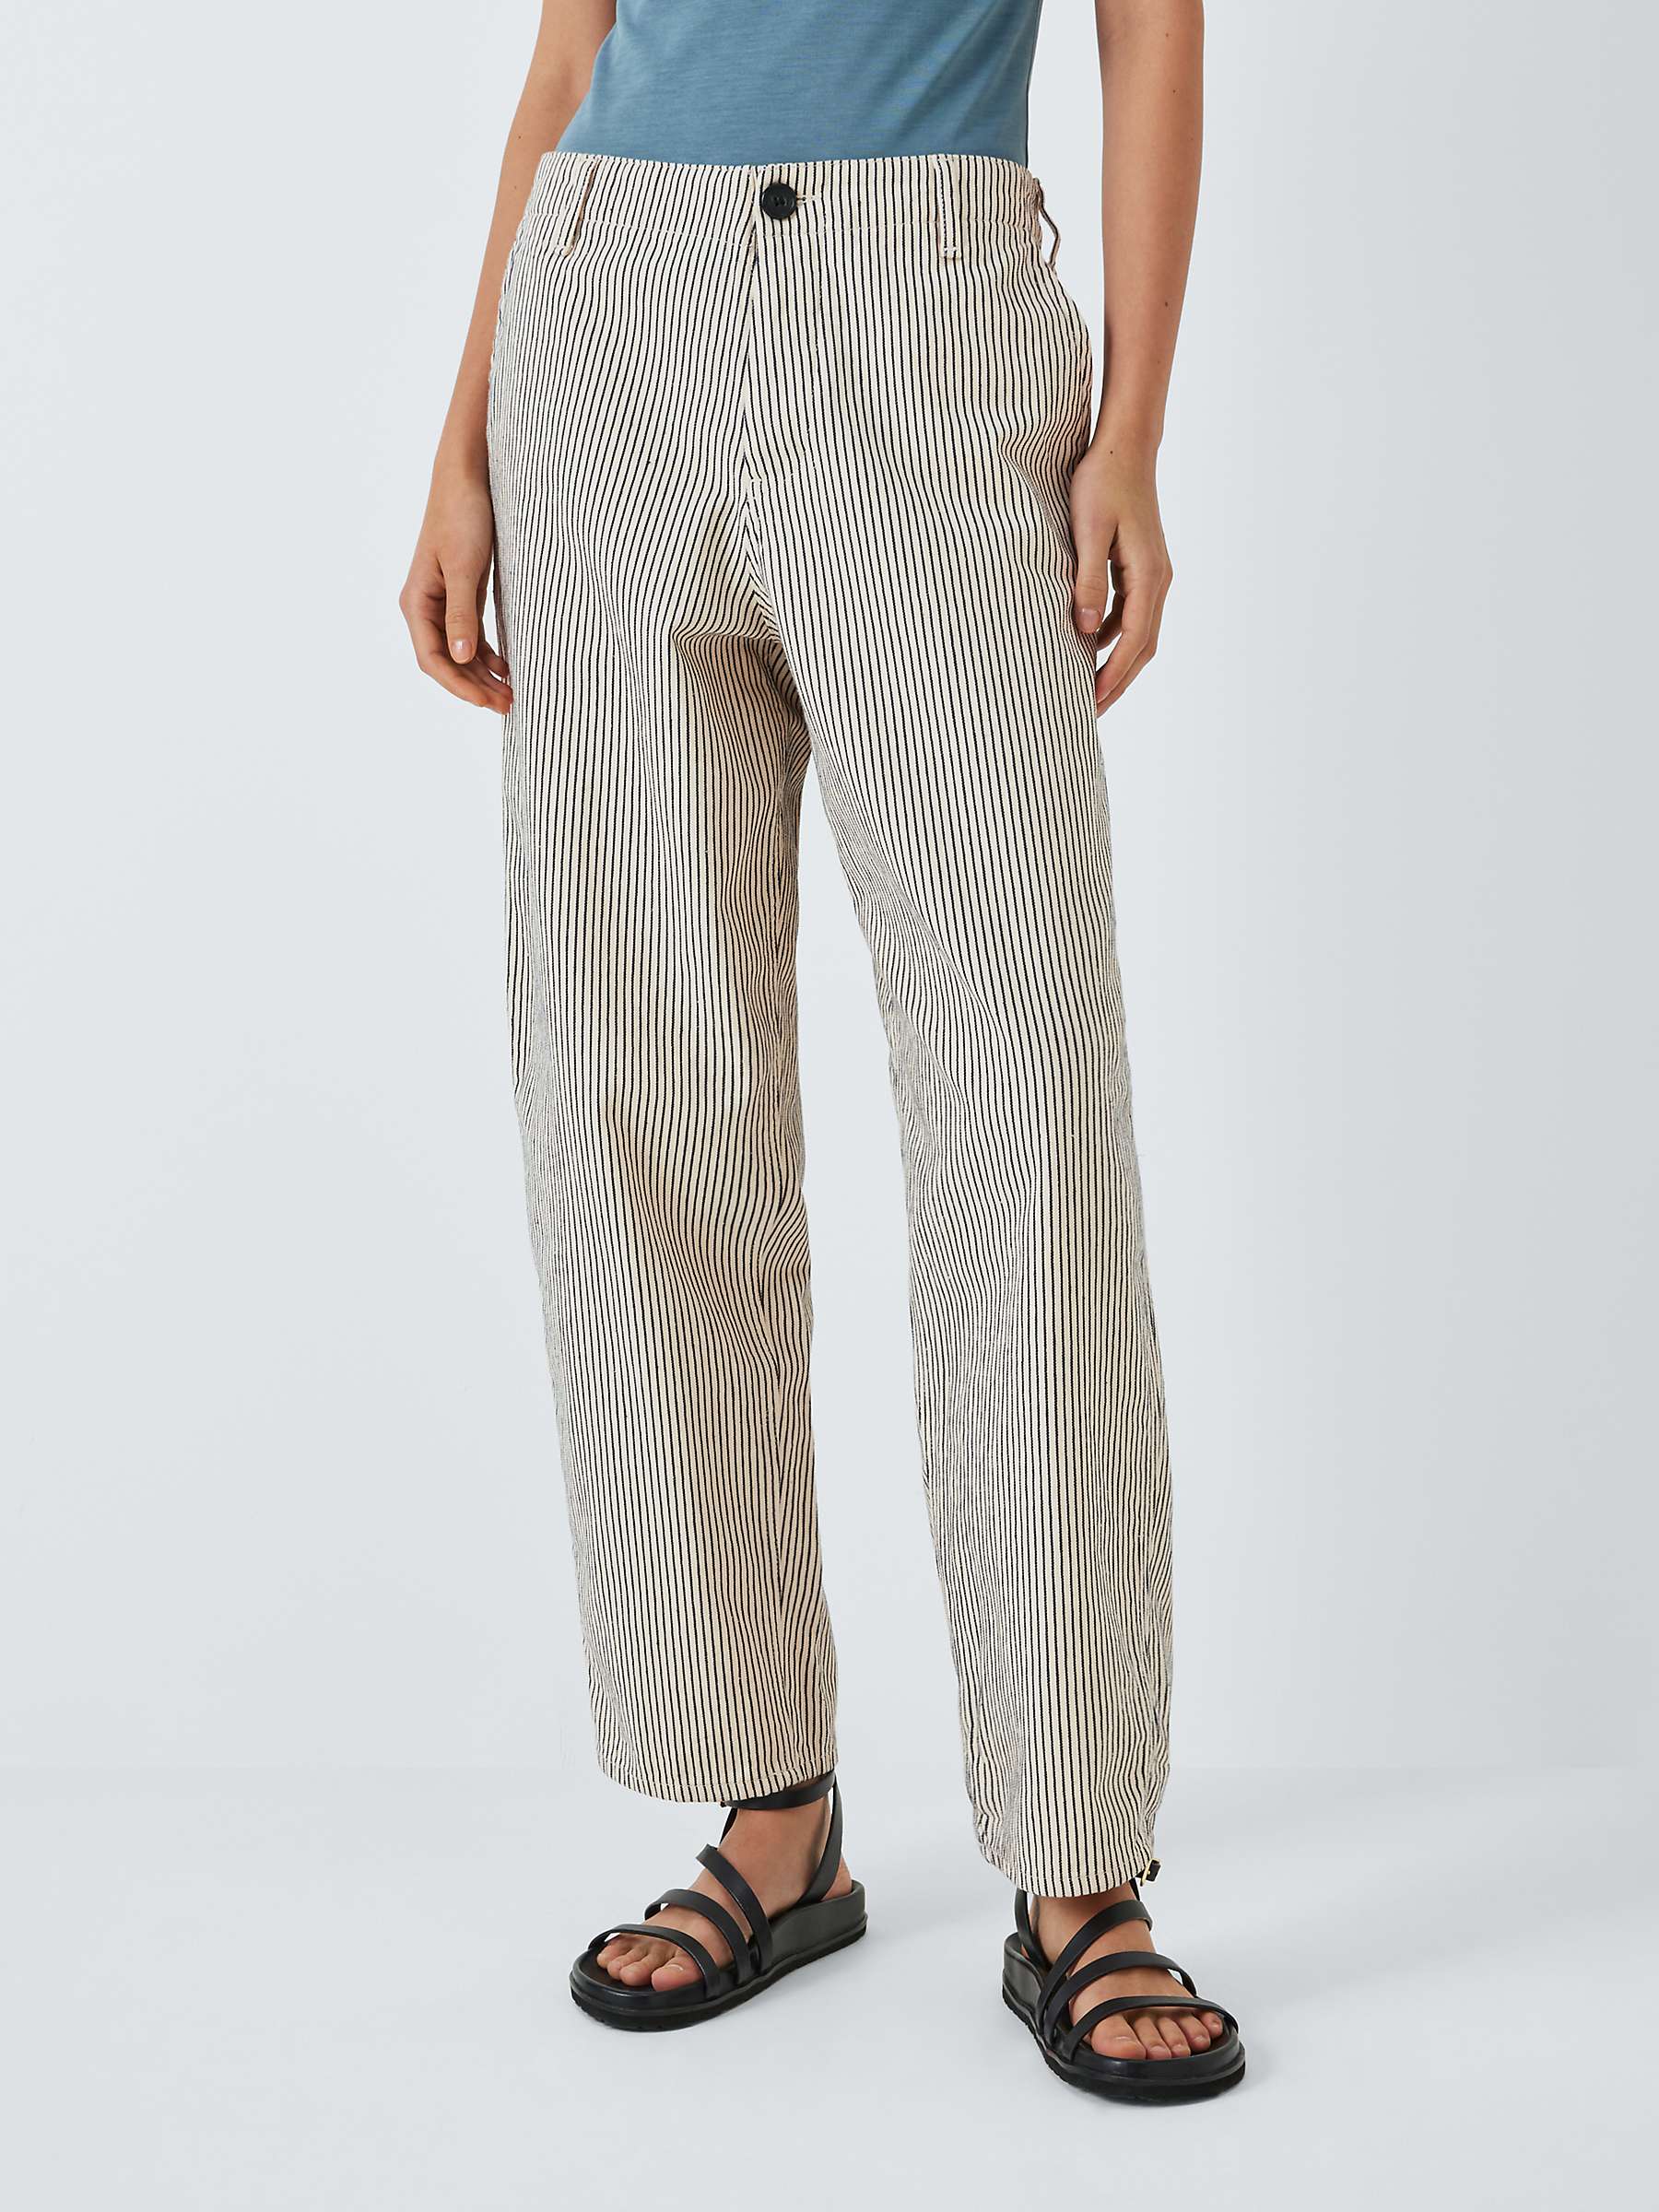 Buy Leon & Harper Armina Stripe Trousers, Ecru Online at johnlewis.com